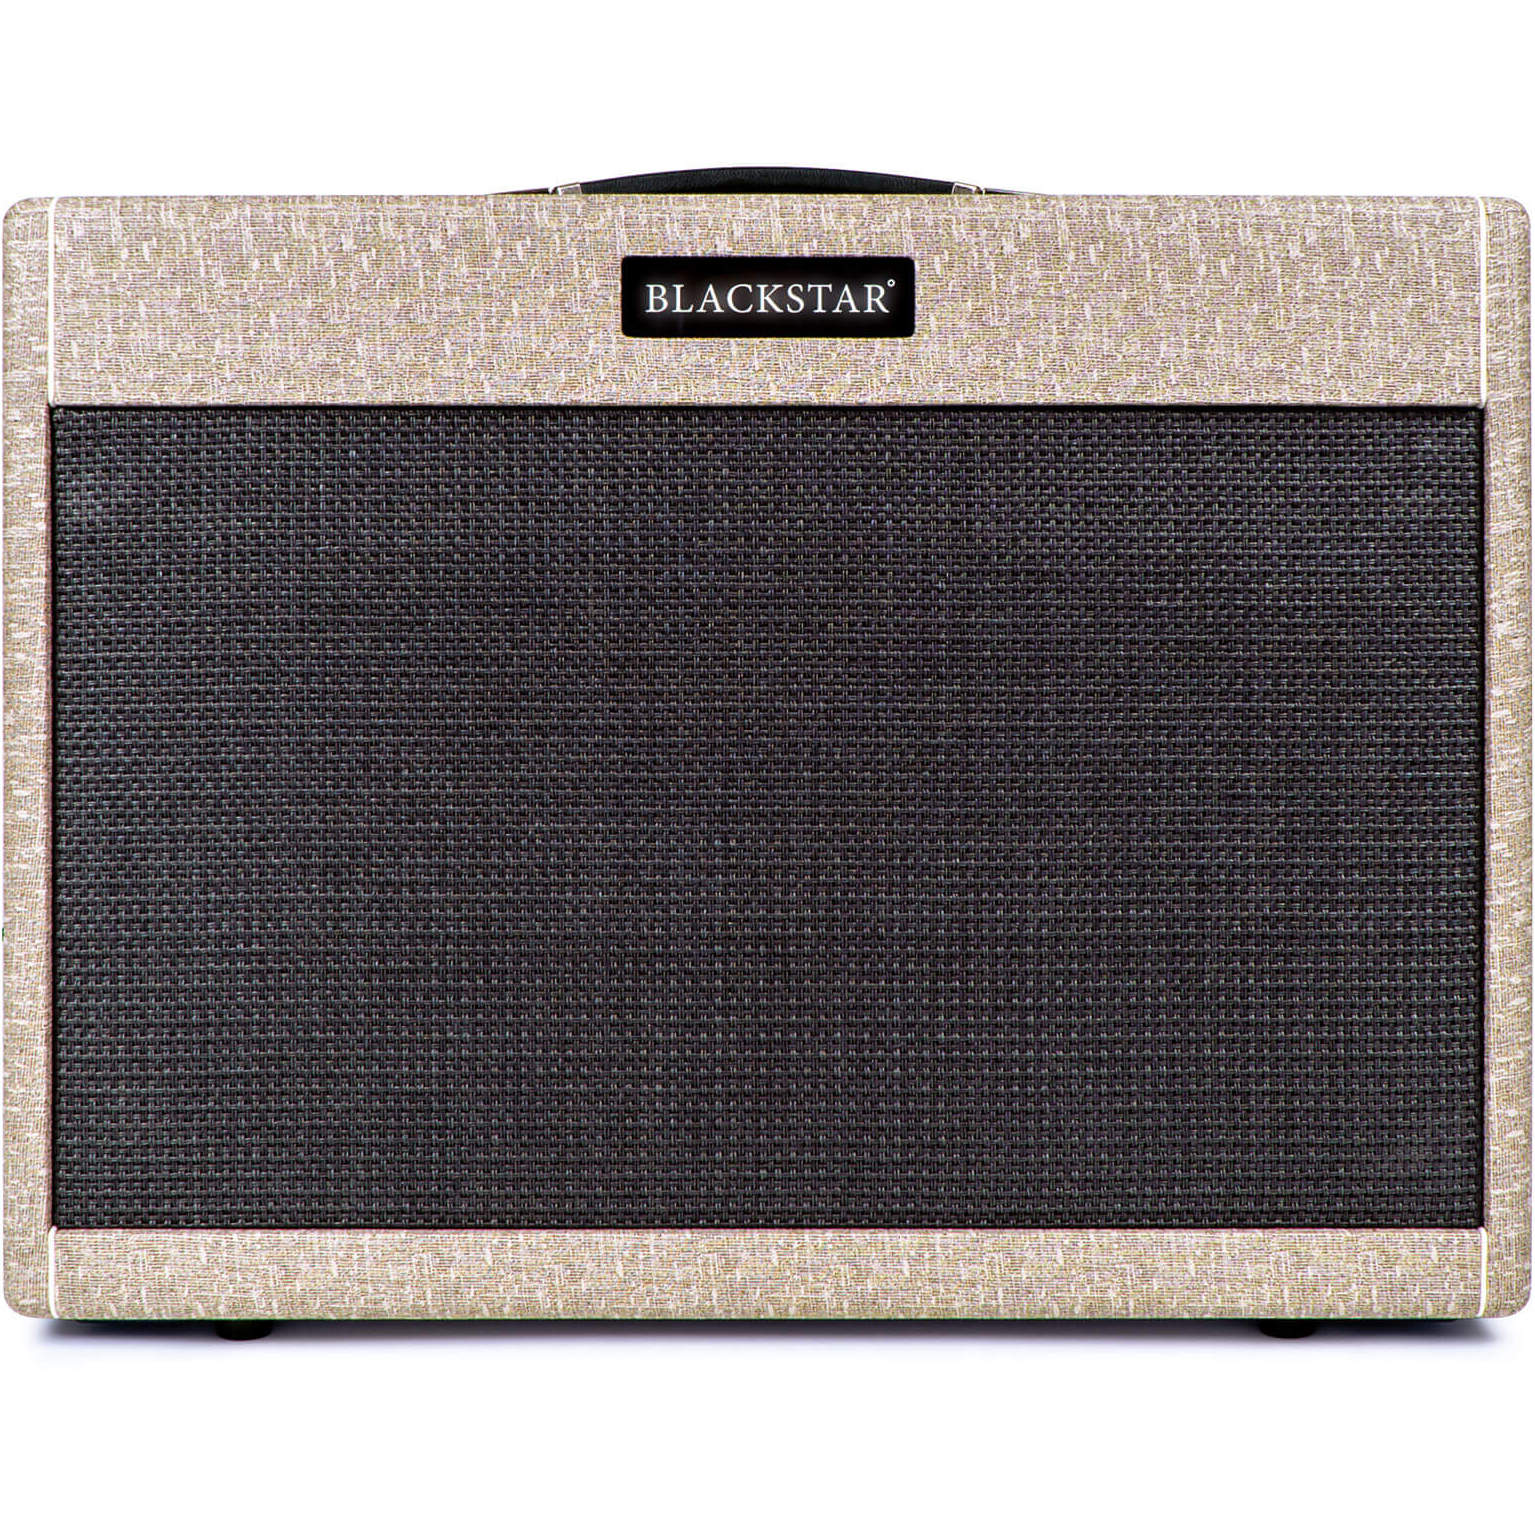 Blackstar St. James 50 EL34C 212 50-watt 2x12" Tube Combo Amp | Music Experience | Shop Online | South Africa